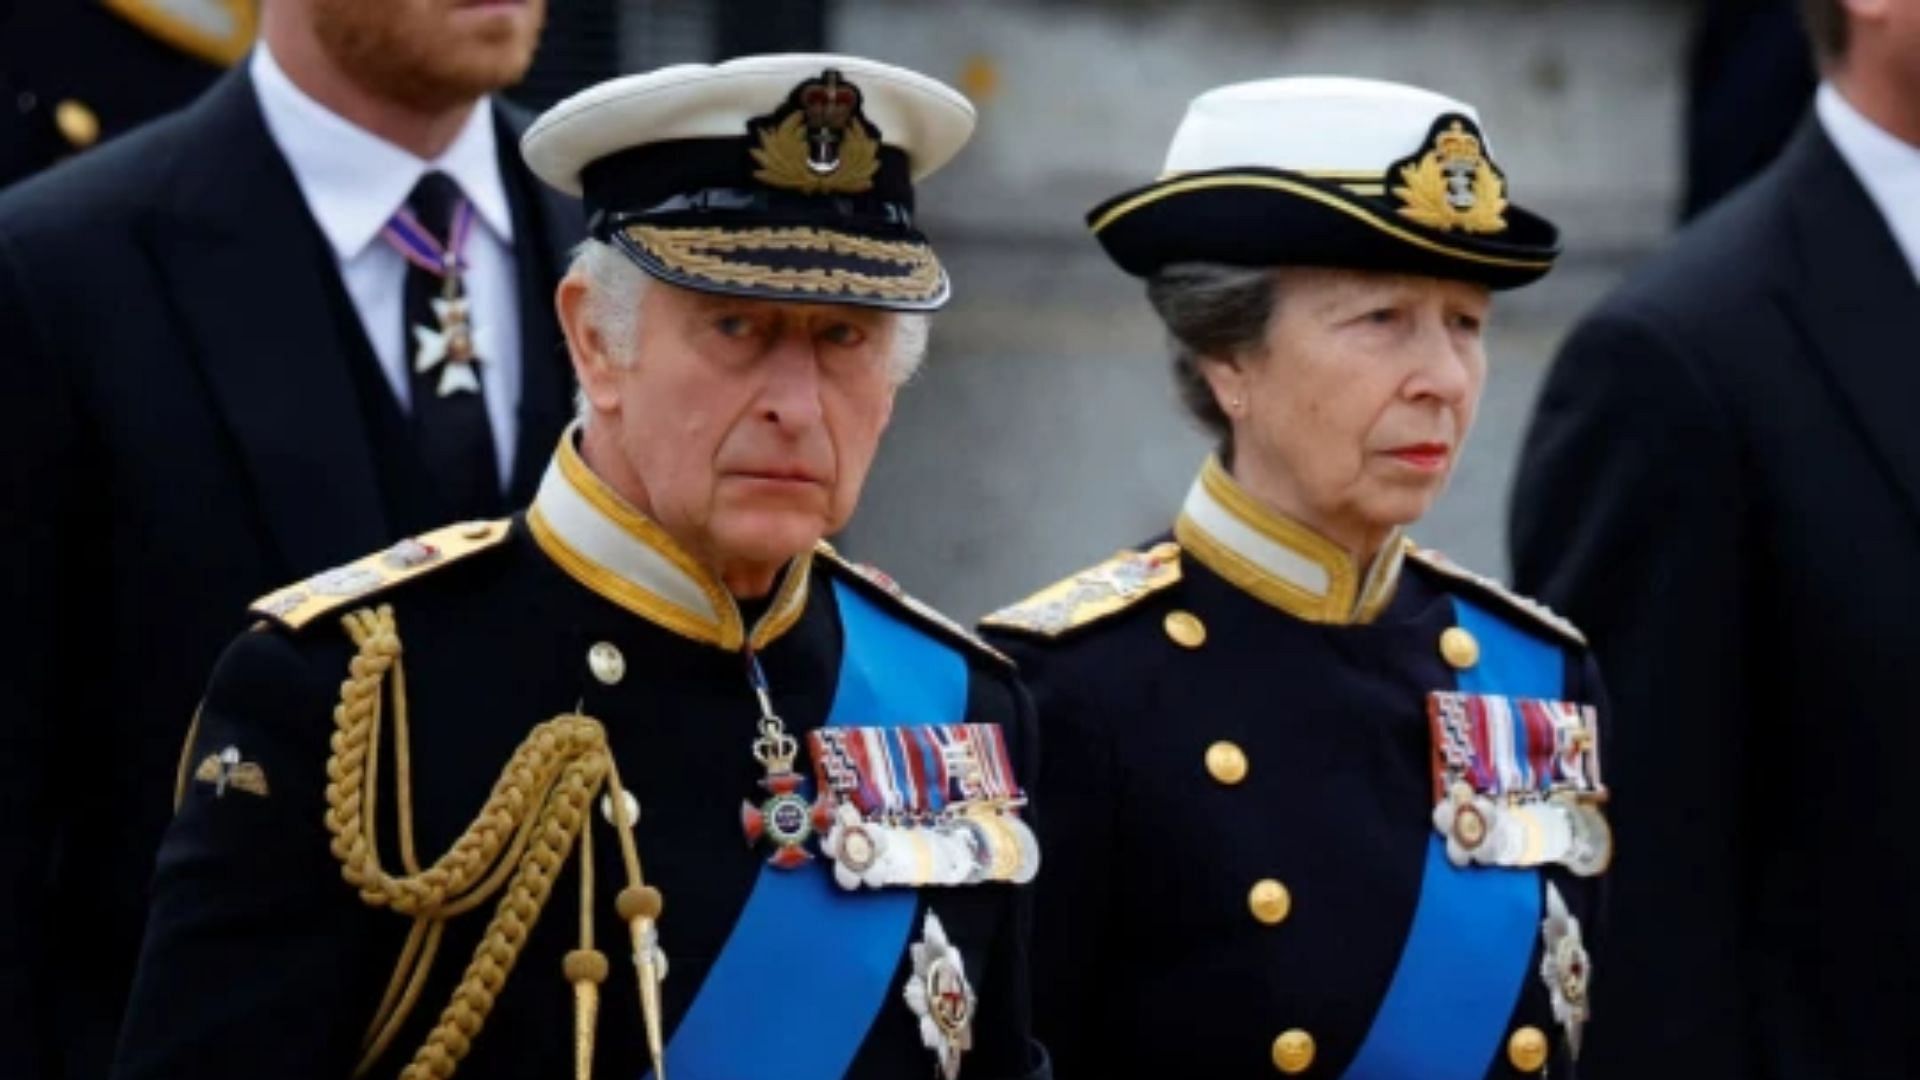 King Charles III and Princess Anne. (Image via WPA Pool/Getty Images)